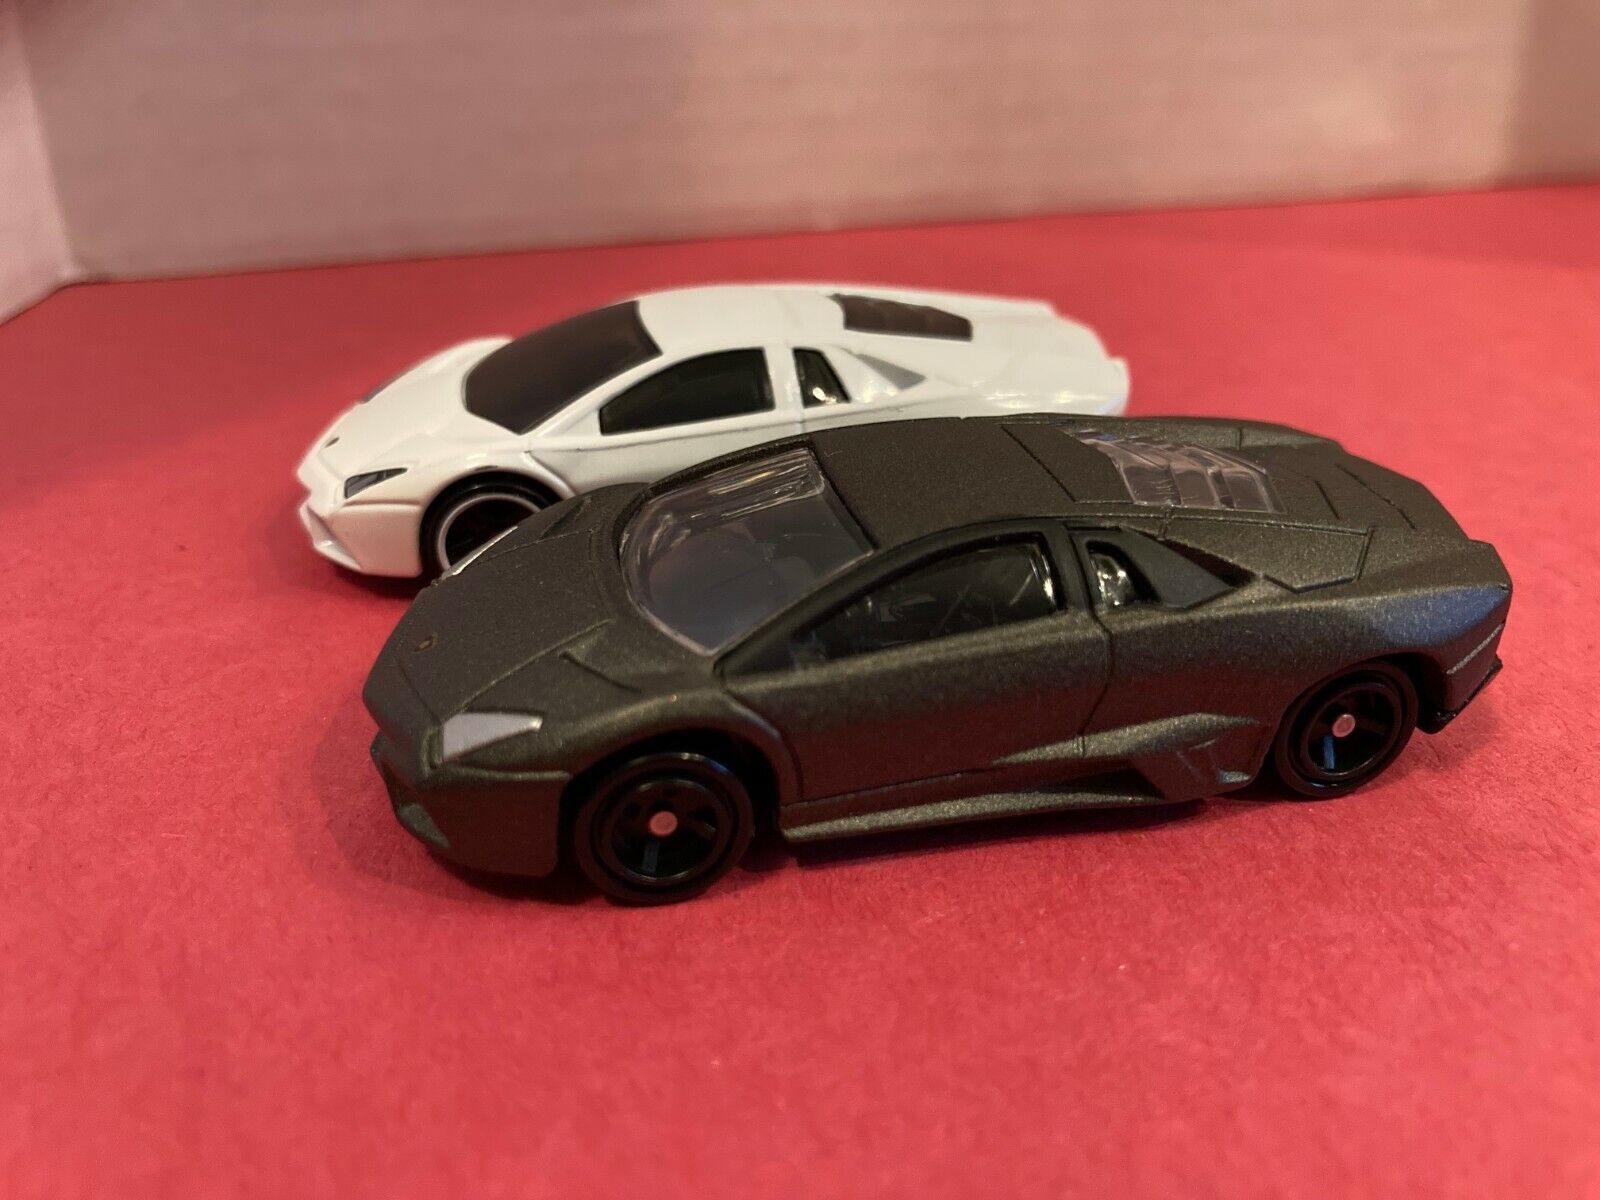 Diecast Hot Wheels and Tomica Lamborghini Model Car Lot 1:64 Reventon Supercar